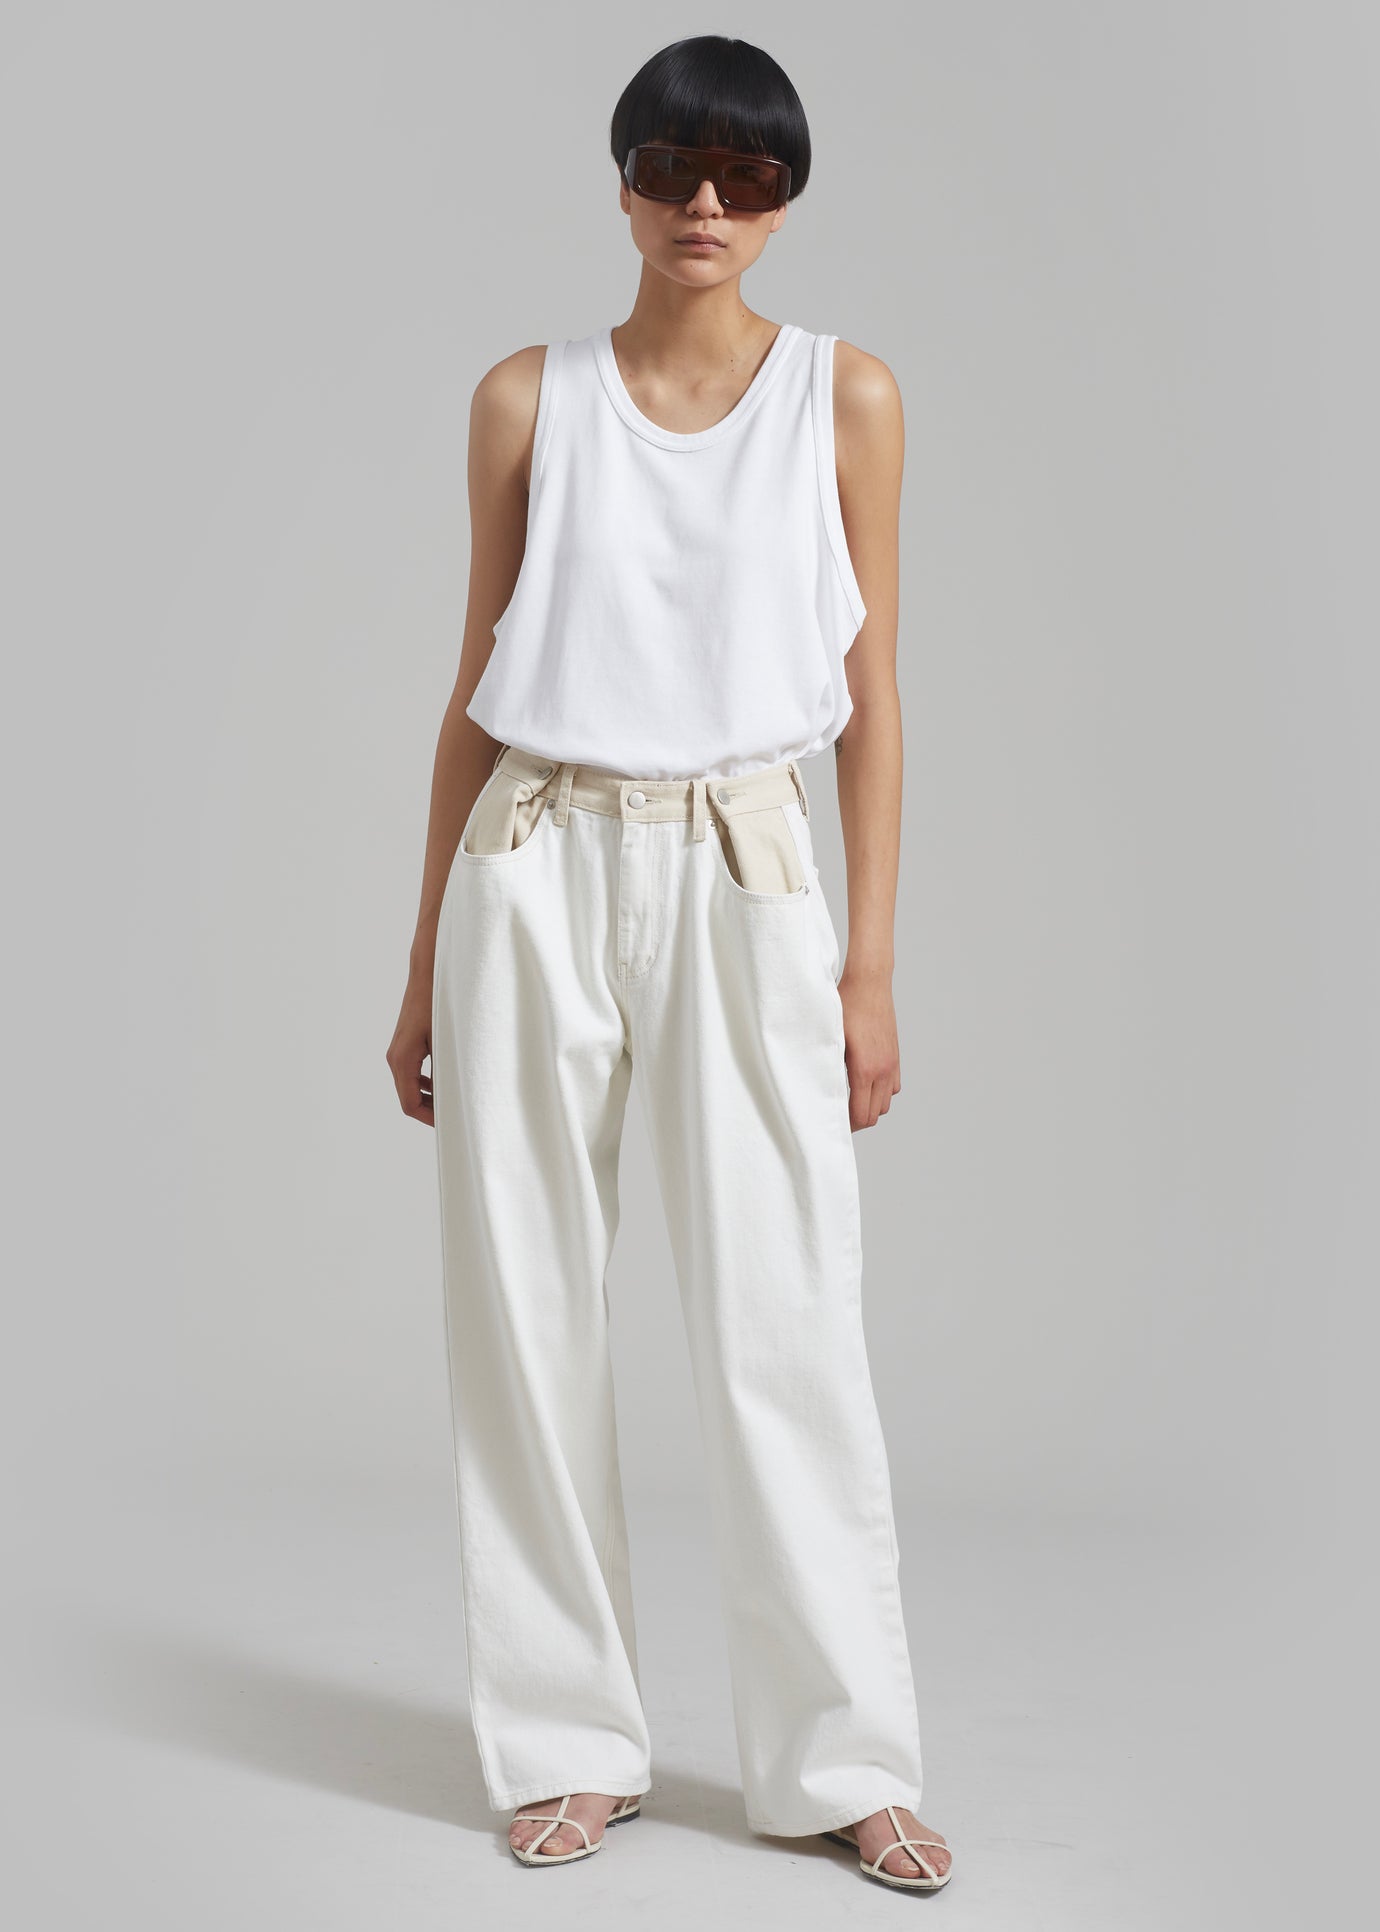 Hayla Contrast Denim Pants - Off White/Beige